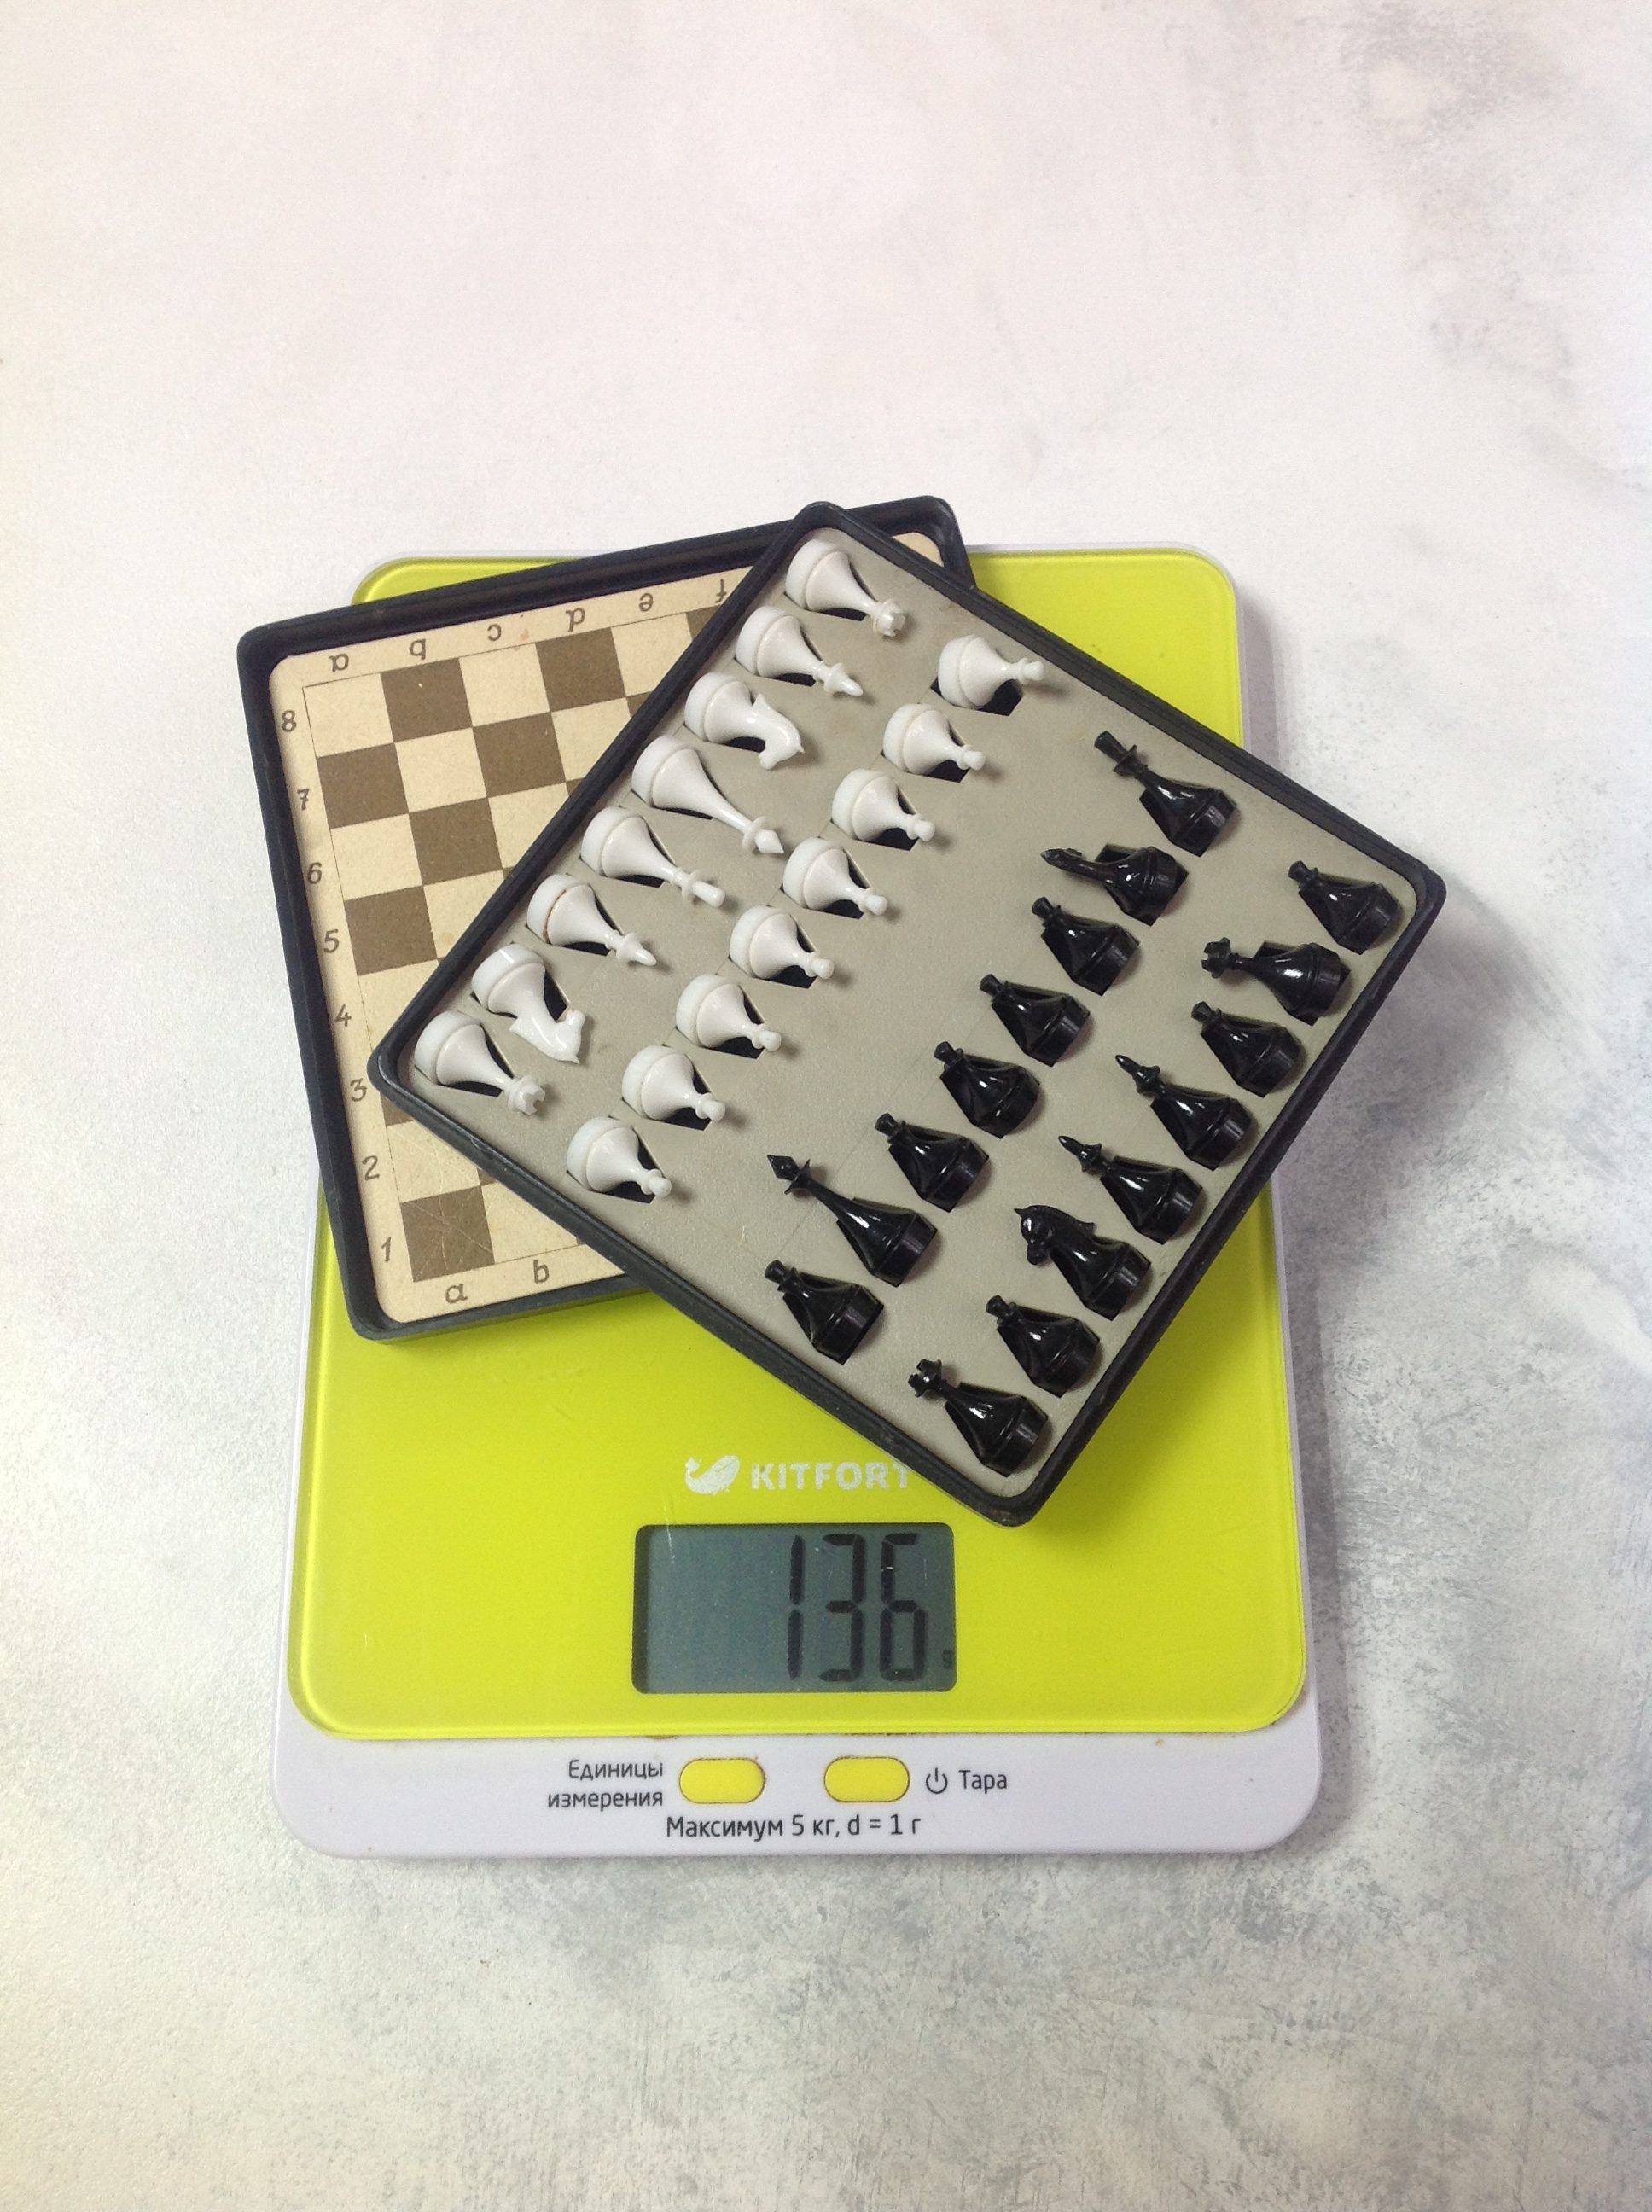 pocket chess weight